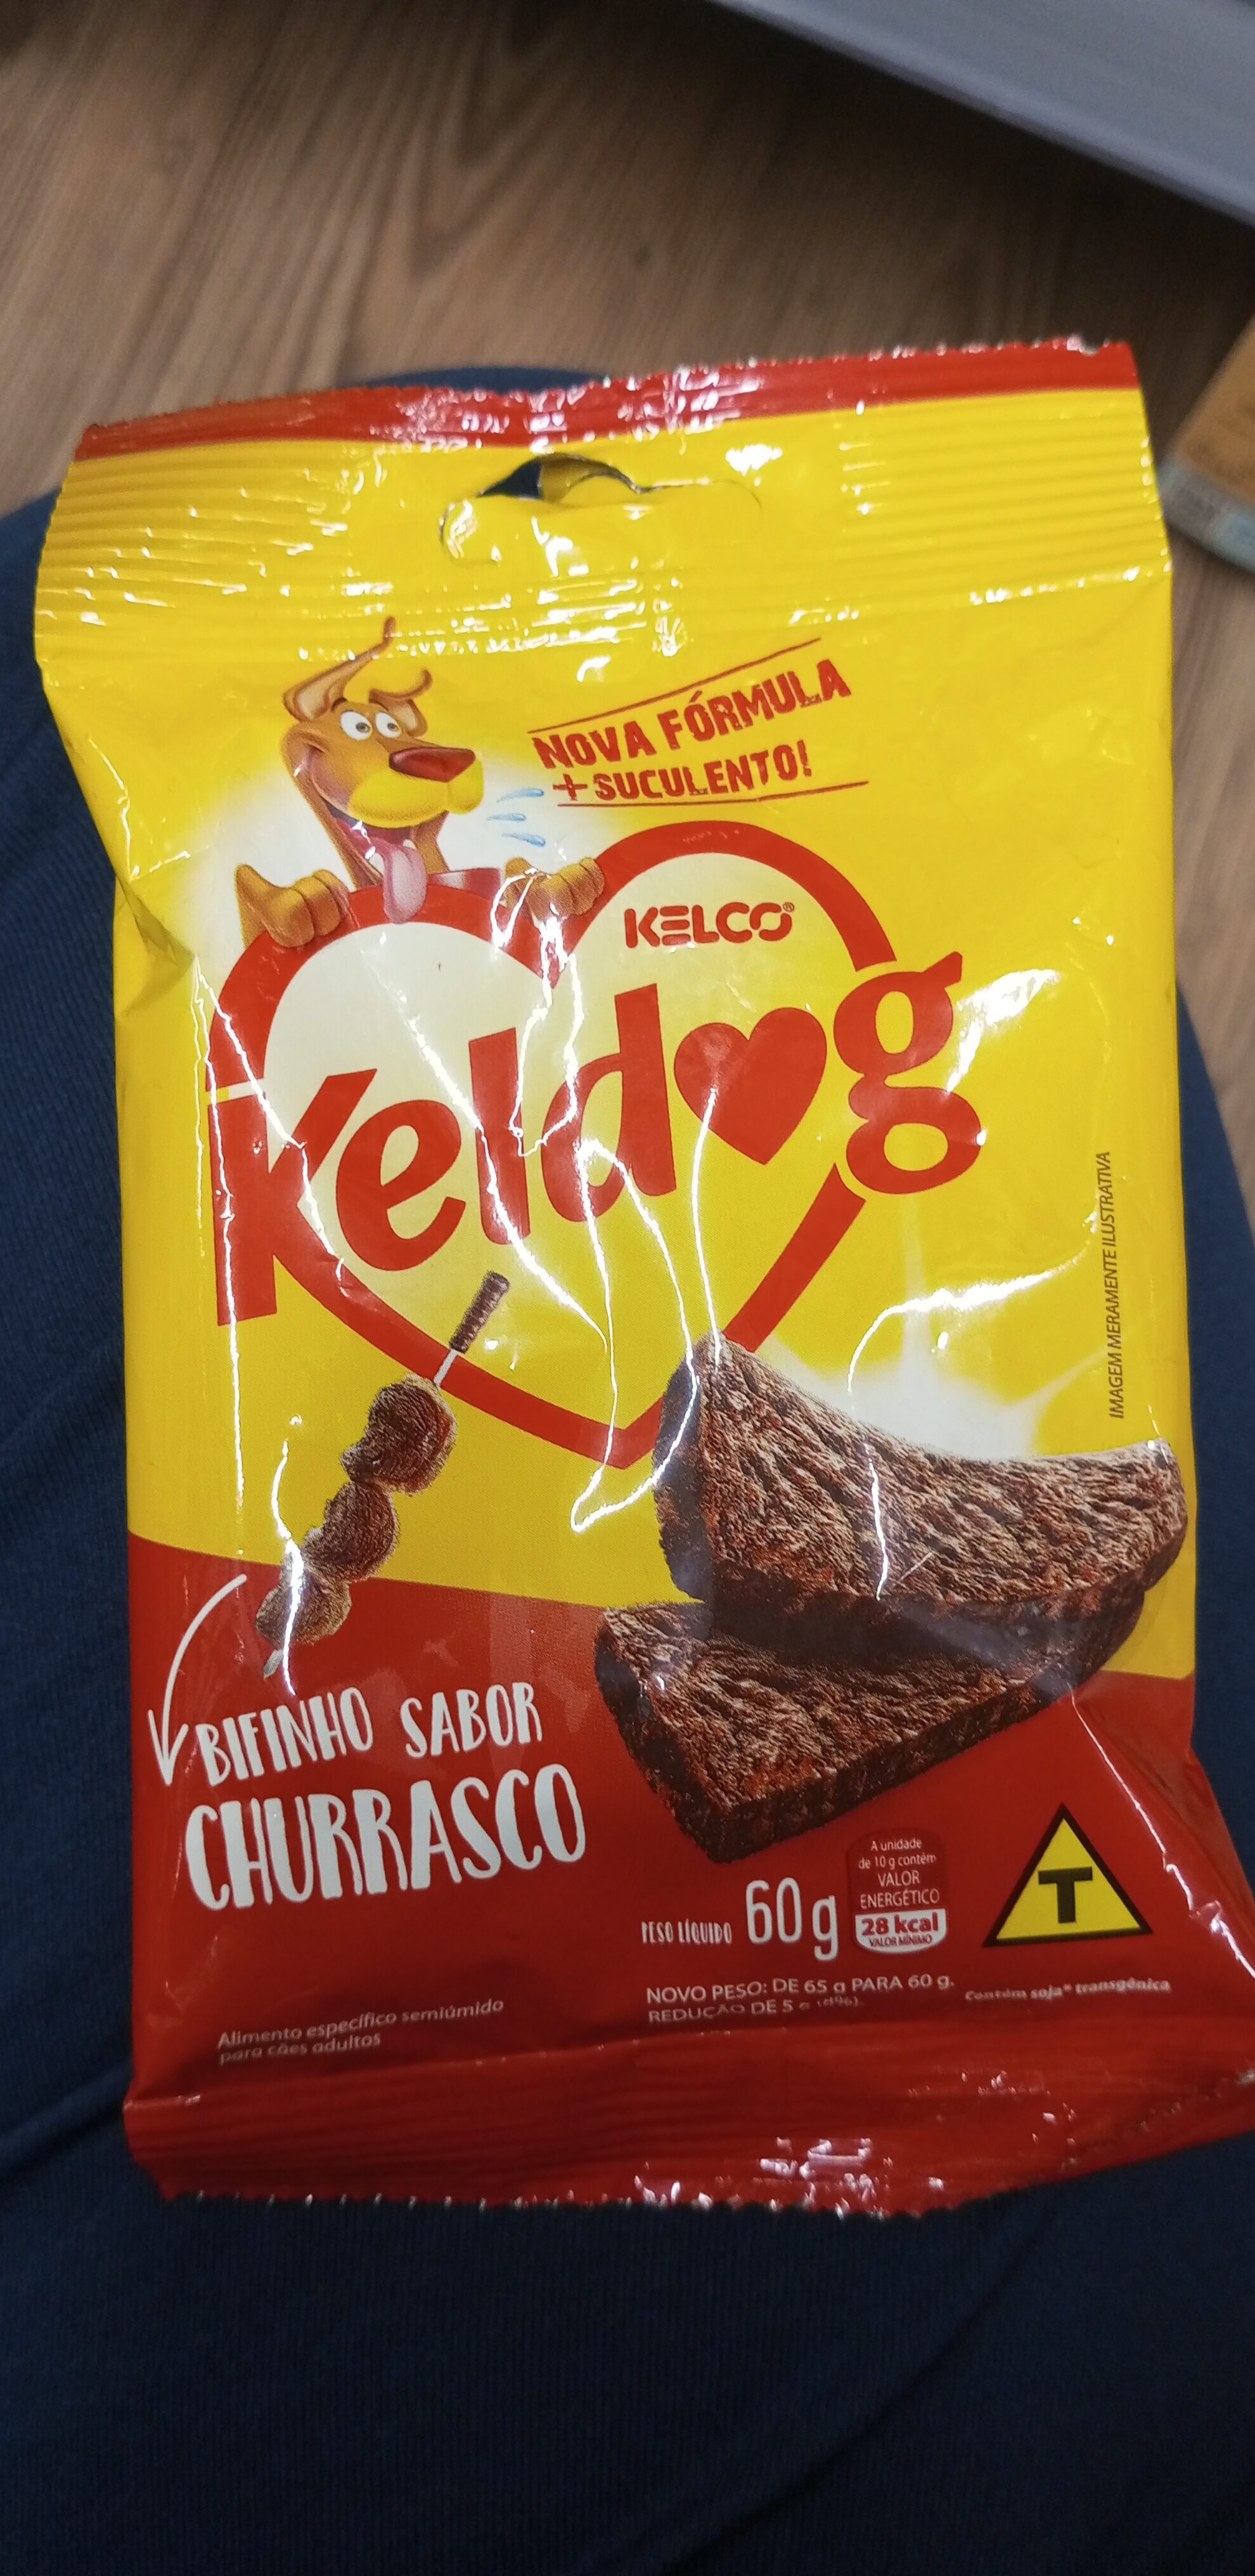 Snack cães keldog 60gr churrasco - Product - pt